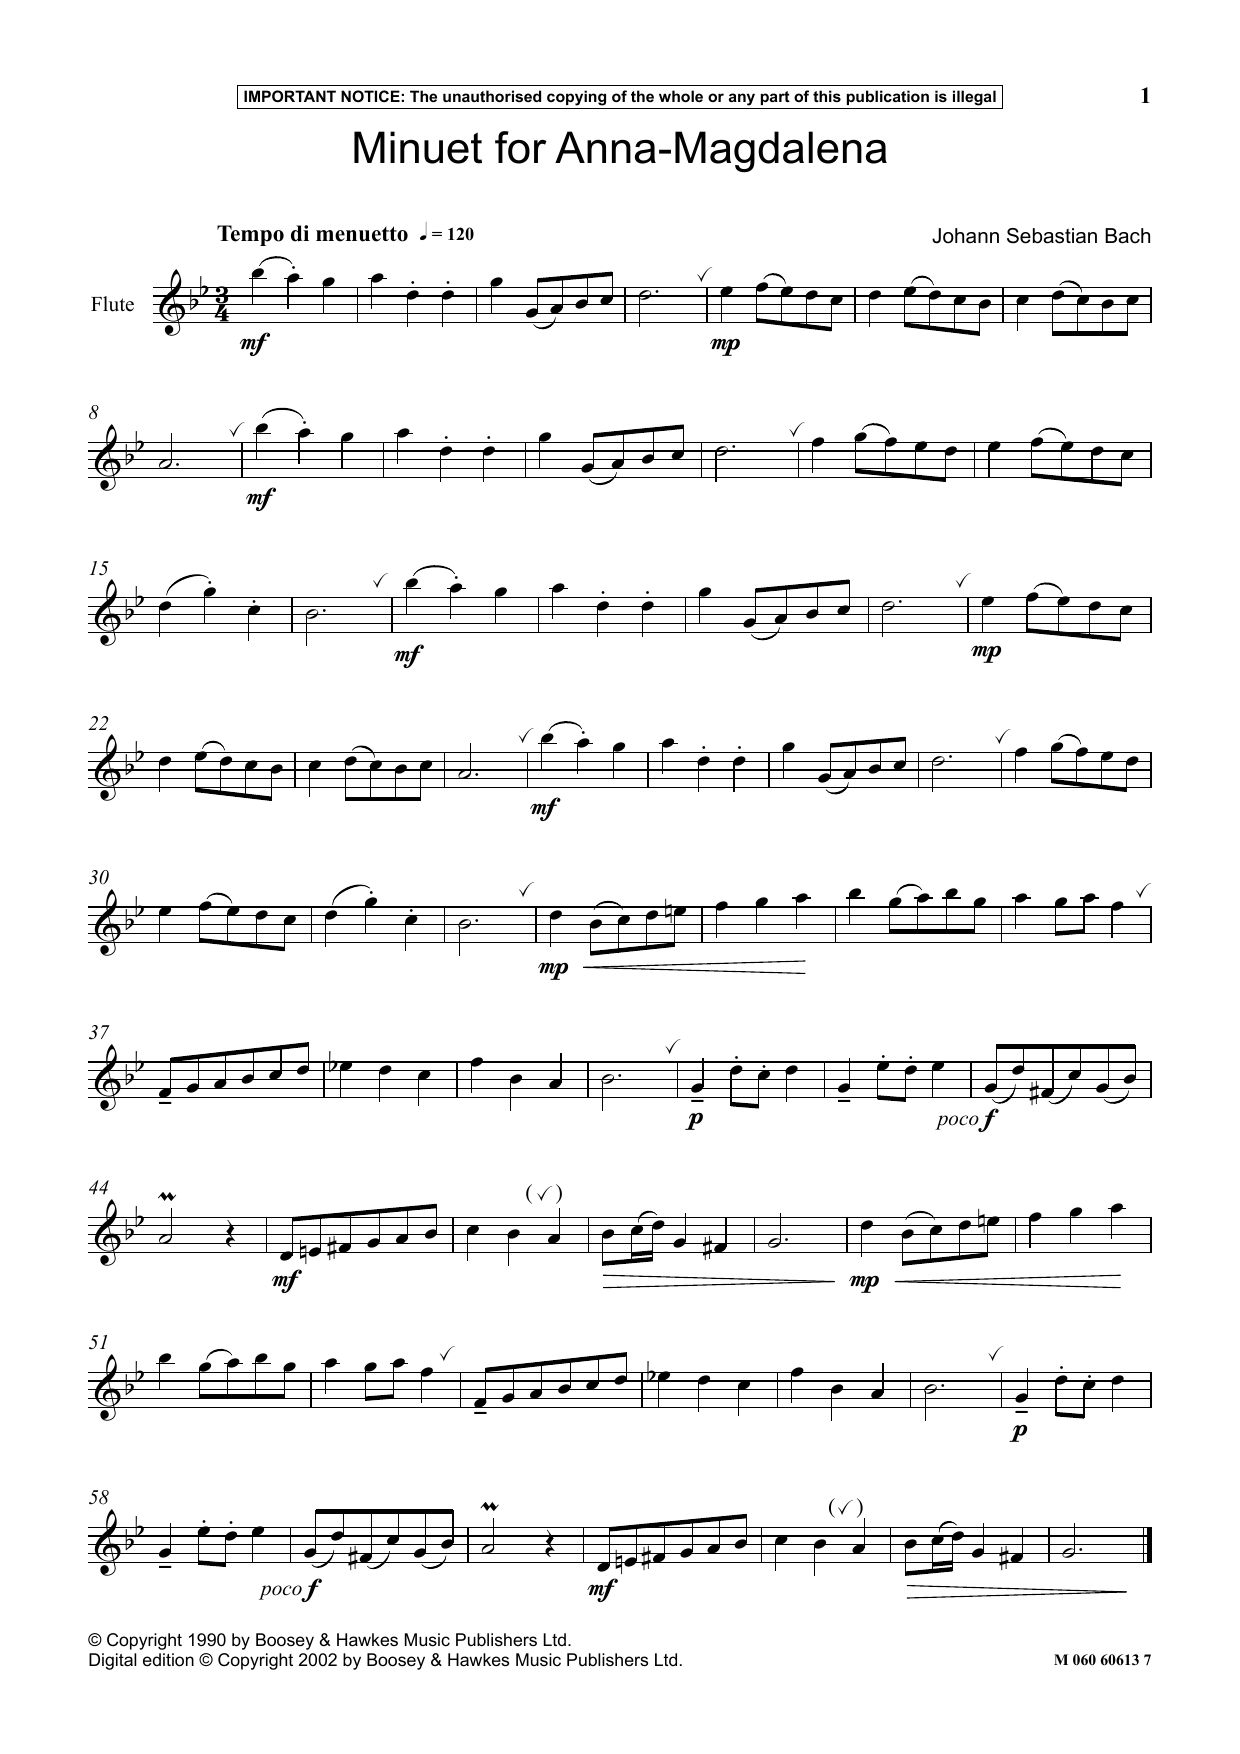 Johann Sebastian Bach Minuet For Anna Magdalena Sheet Music Notes & Chords for Instrumental Solo - Download or Print PDF